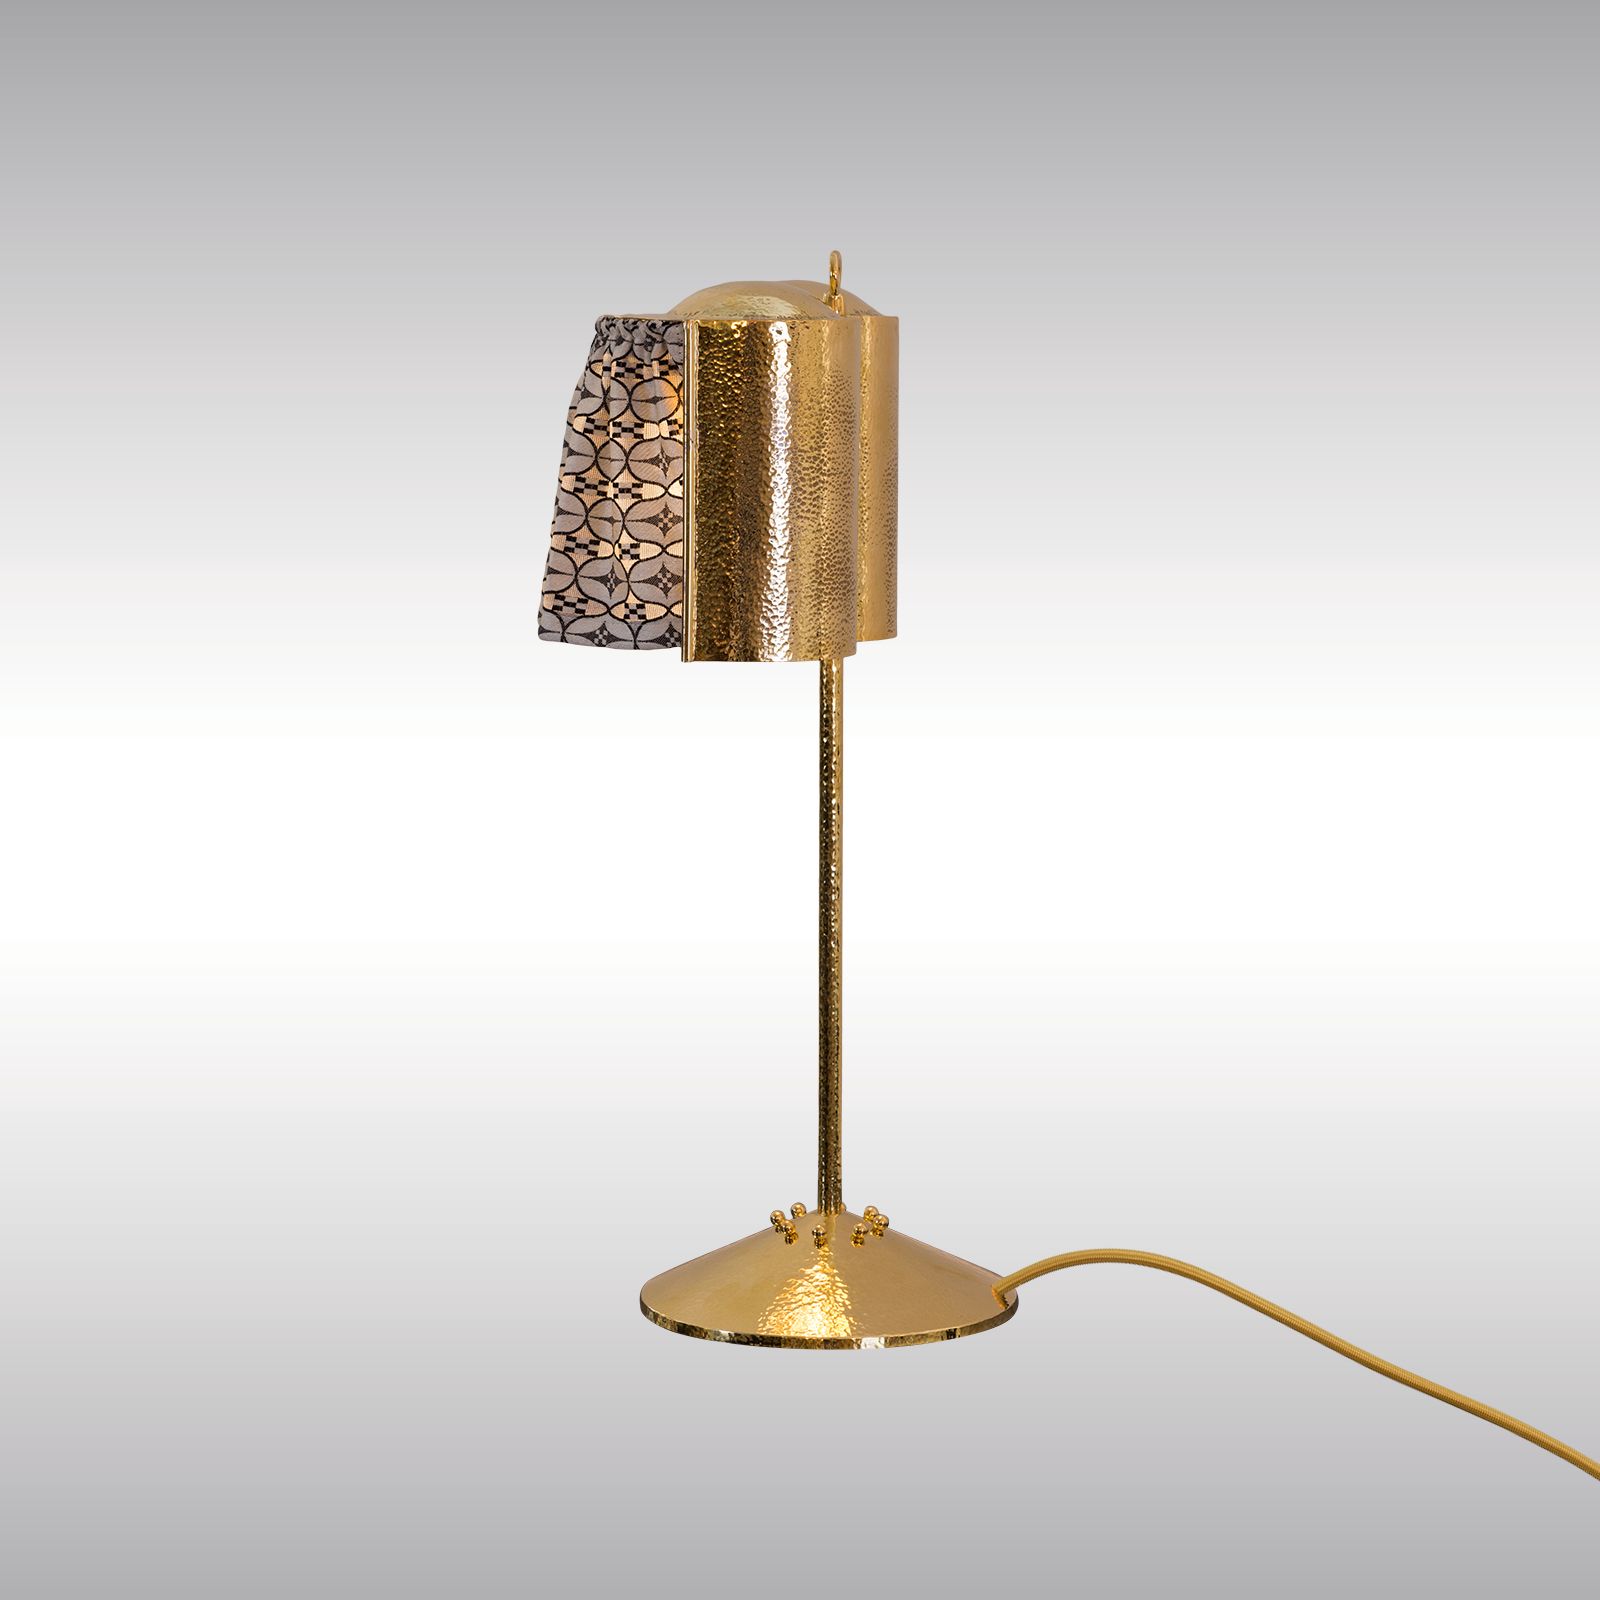 WOKA LAMPS VIENNA - OrderNr.:  22001|Josef Hoffmann and Wiener Werkstaette Desk Lamp - candle-holder